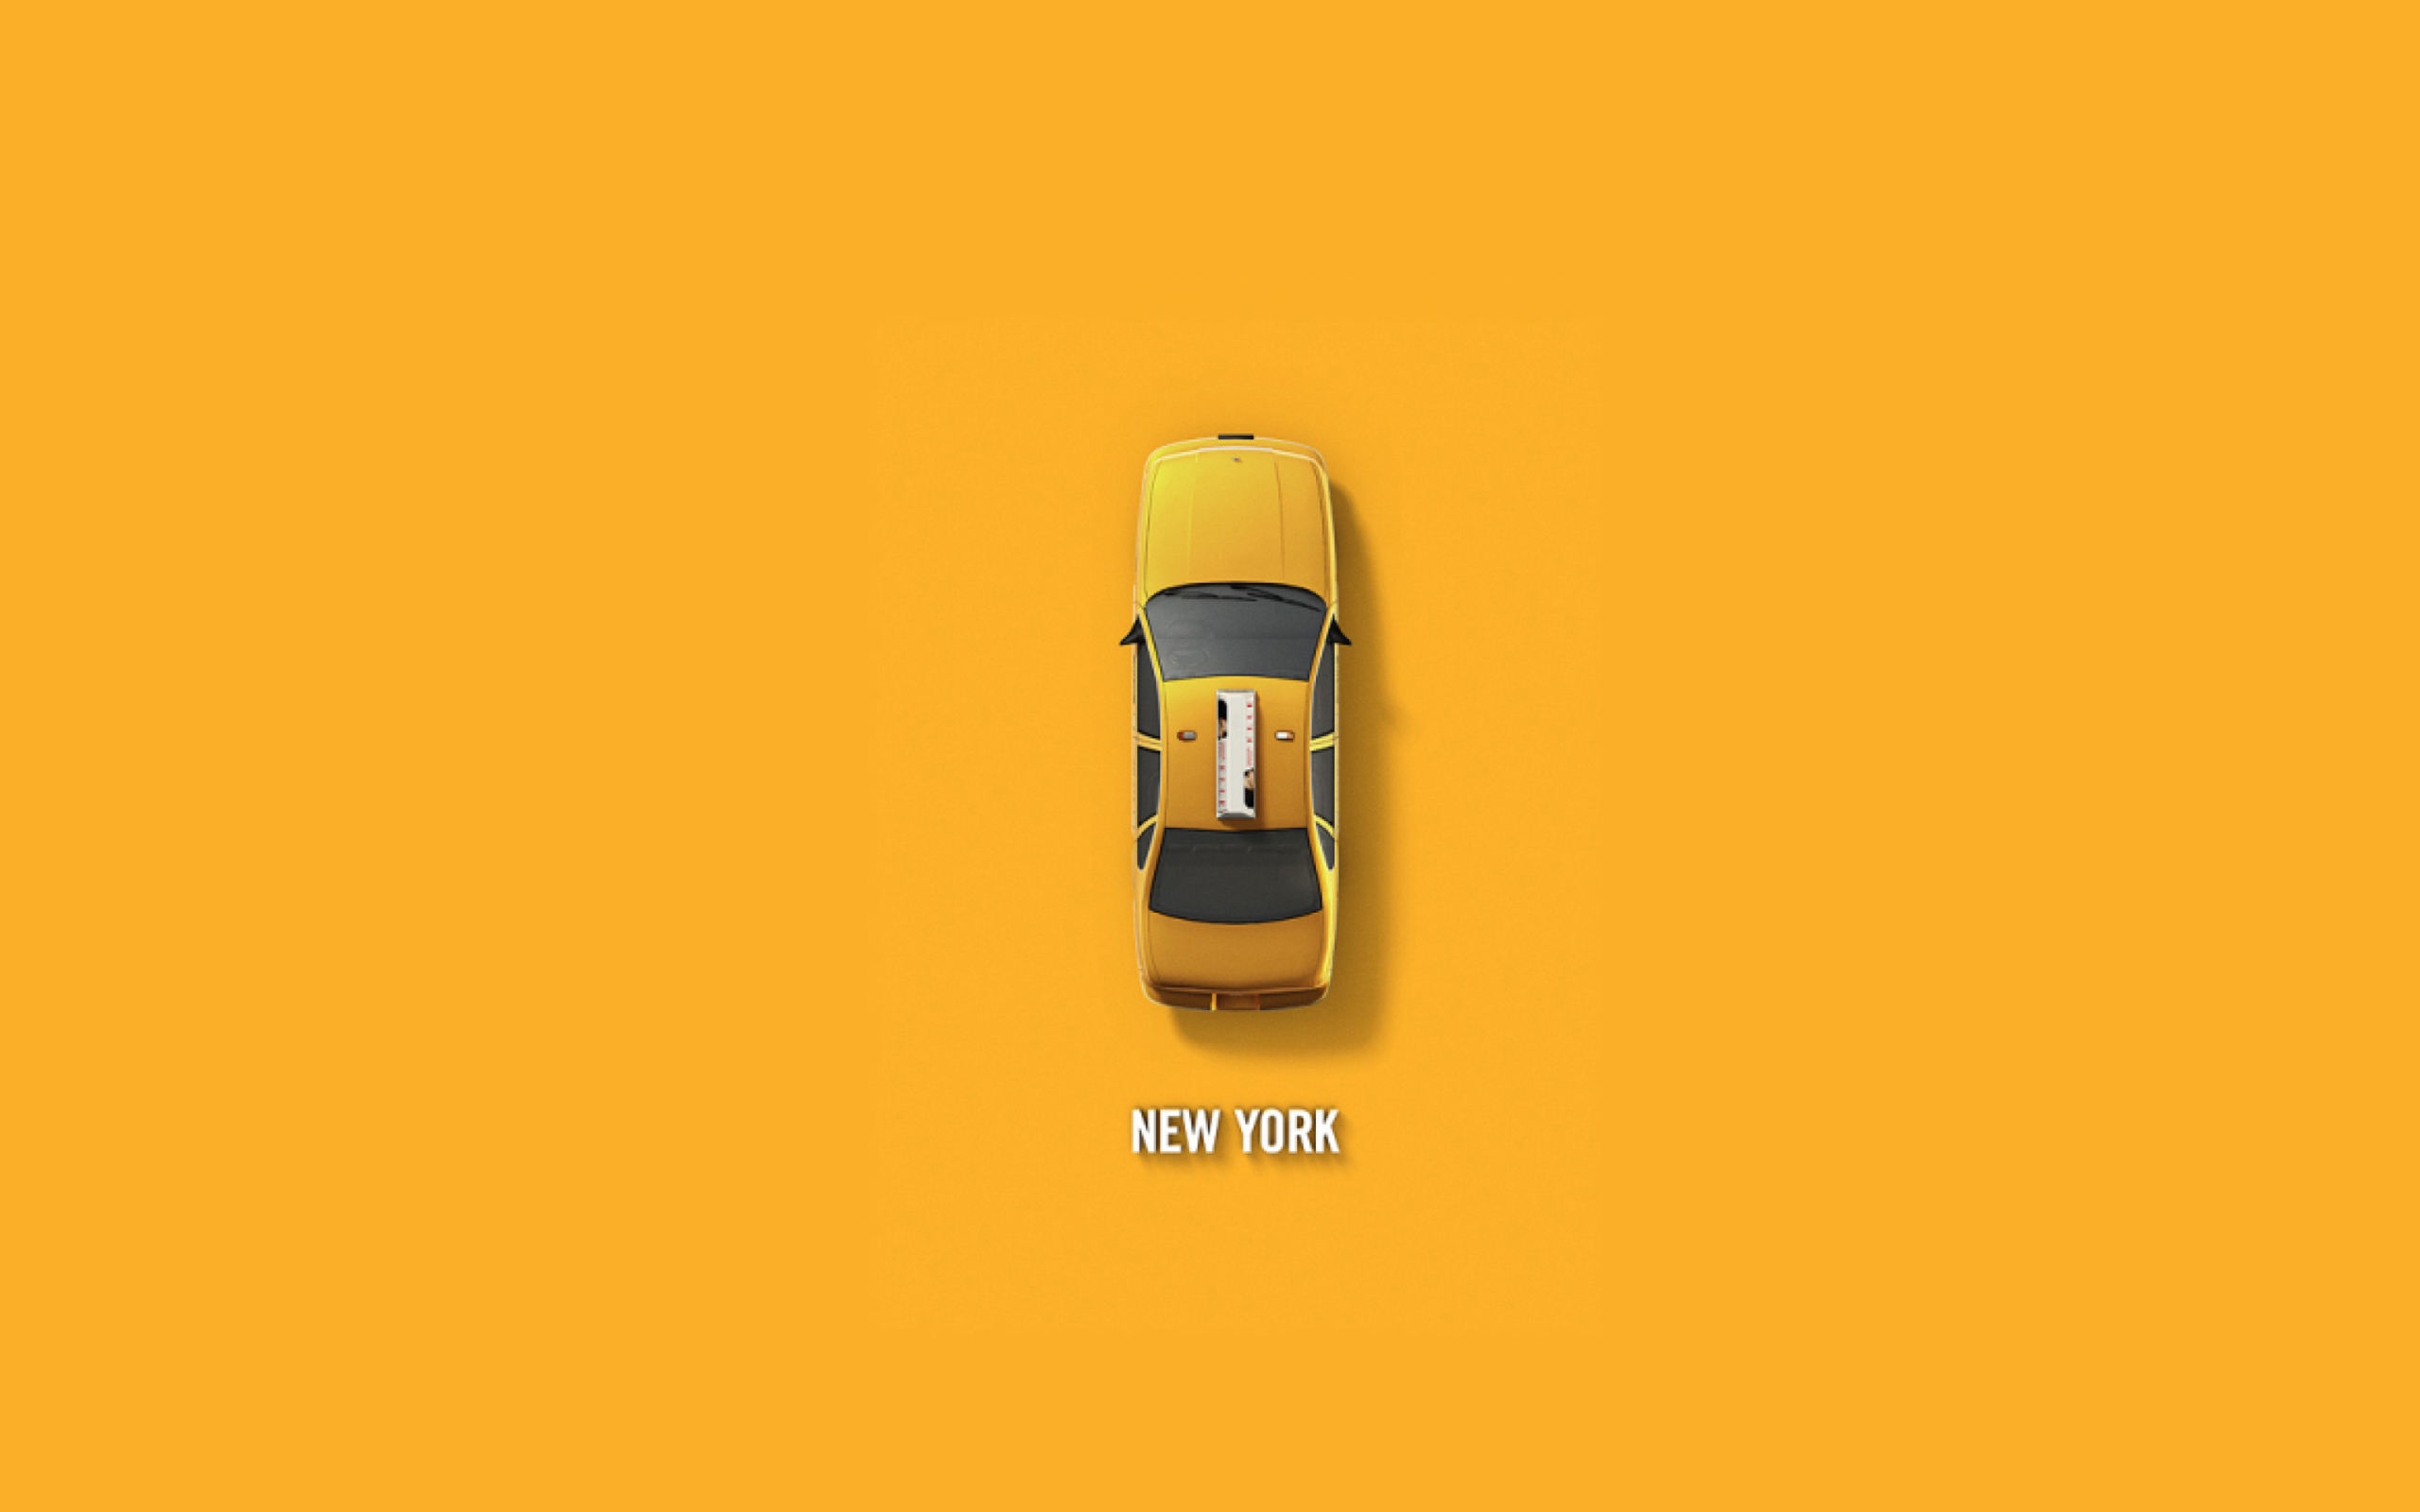 Das New York Cab Wallpaper 2560x1600